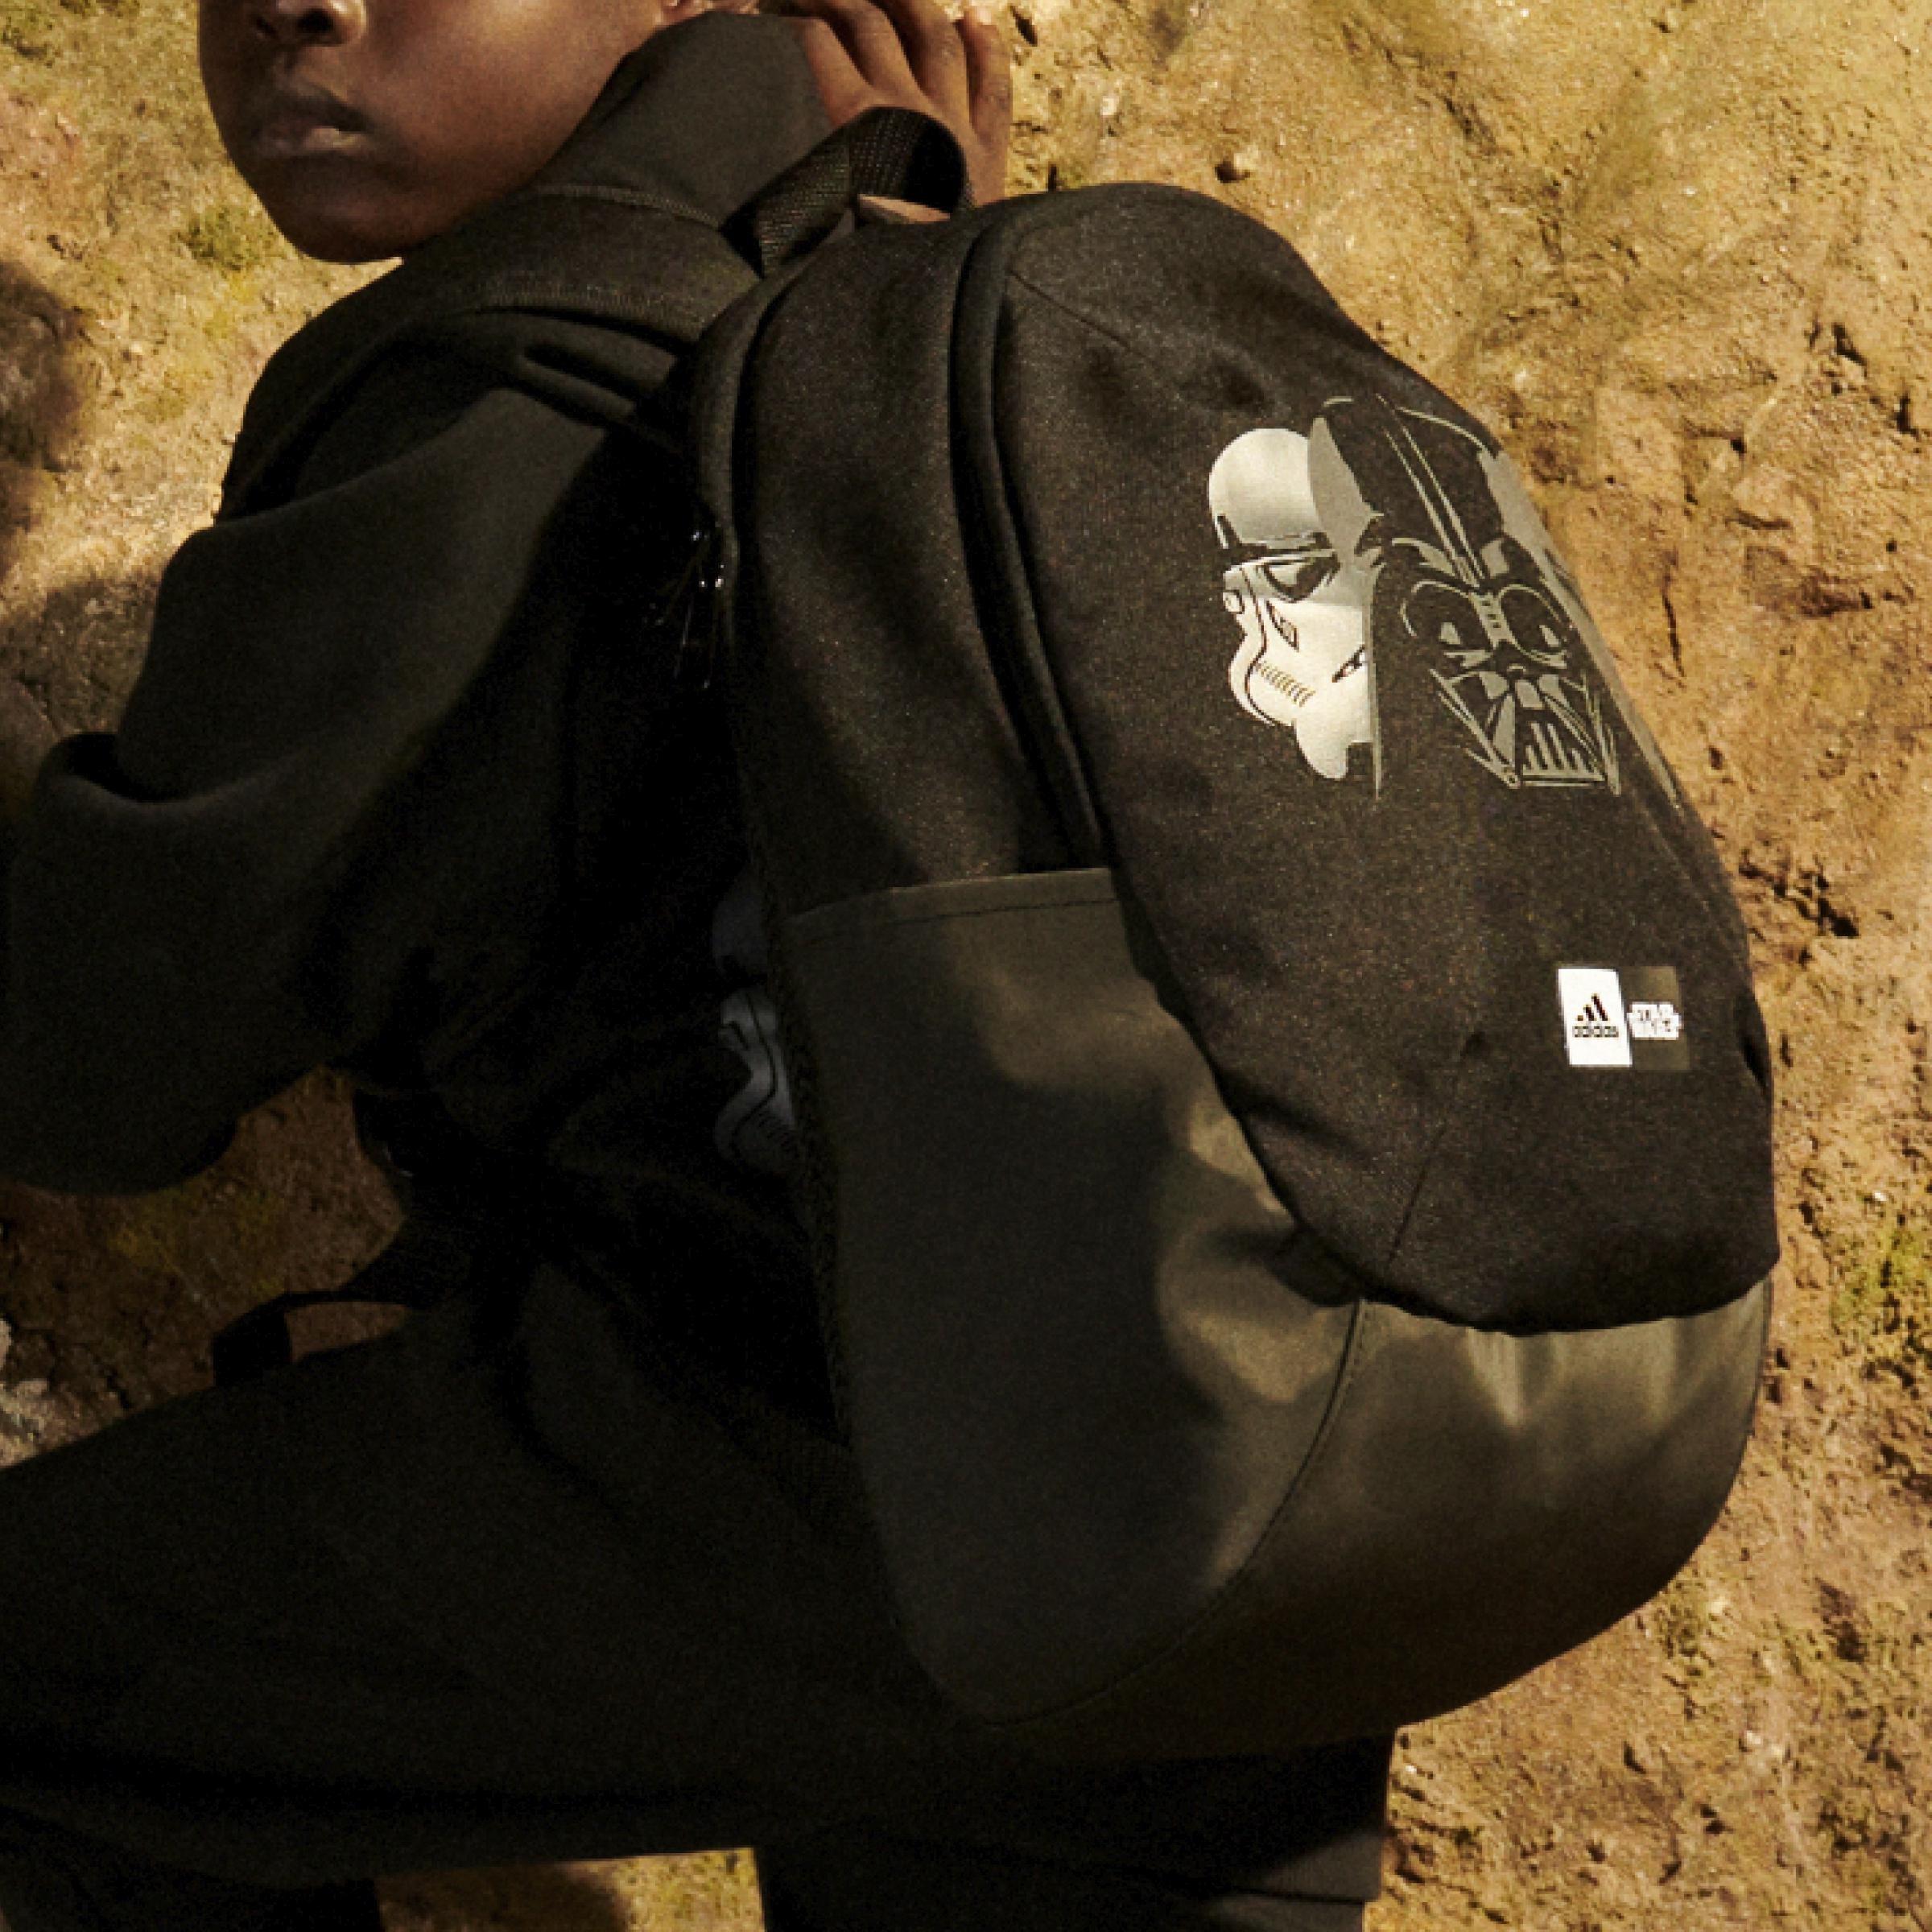 Adidas - Kids Boys Star Wars Backpack, Black